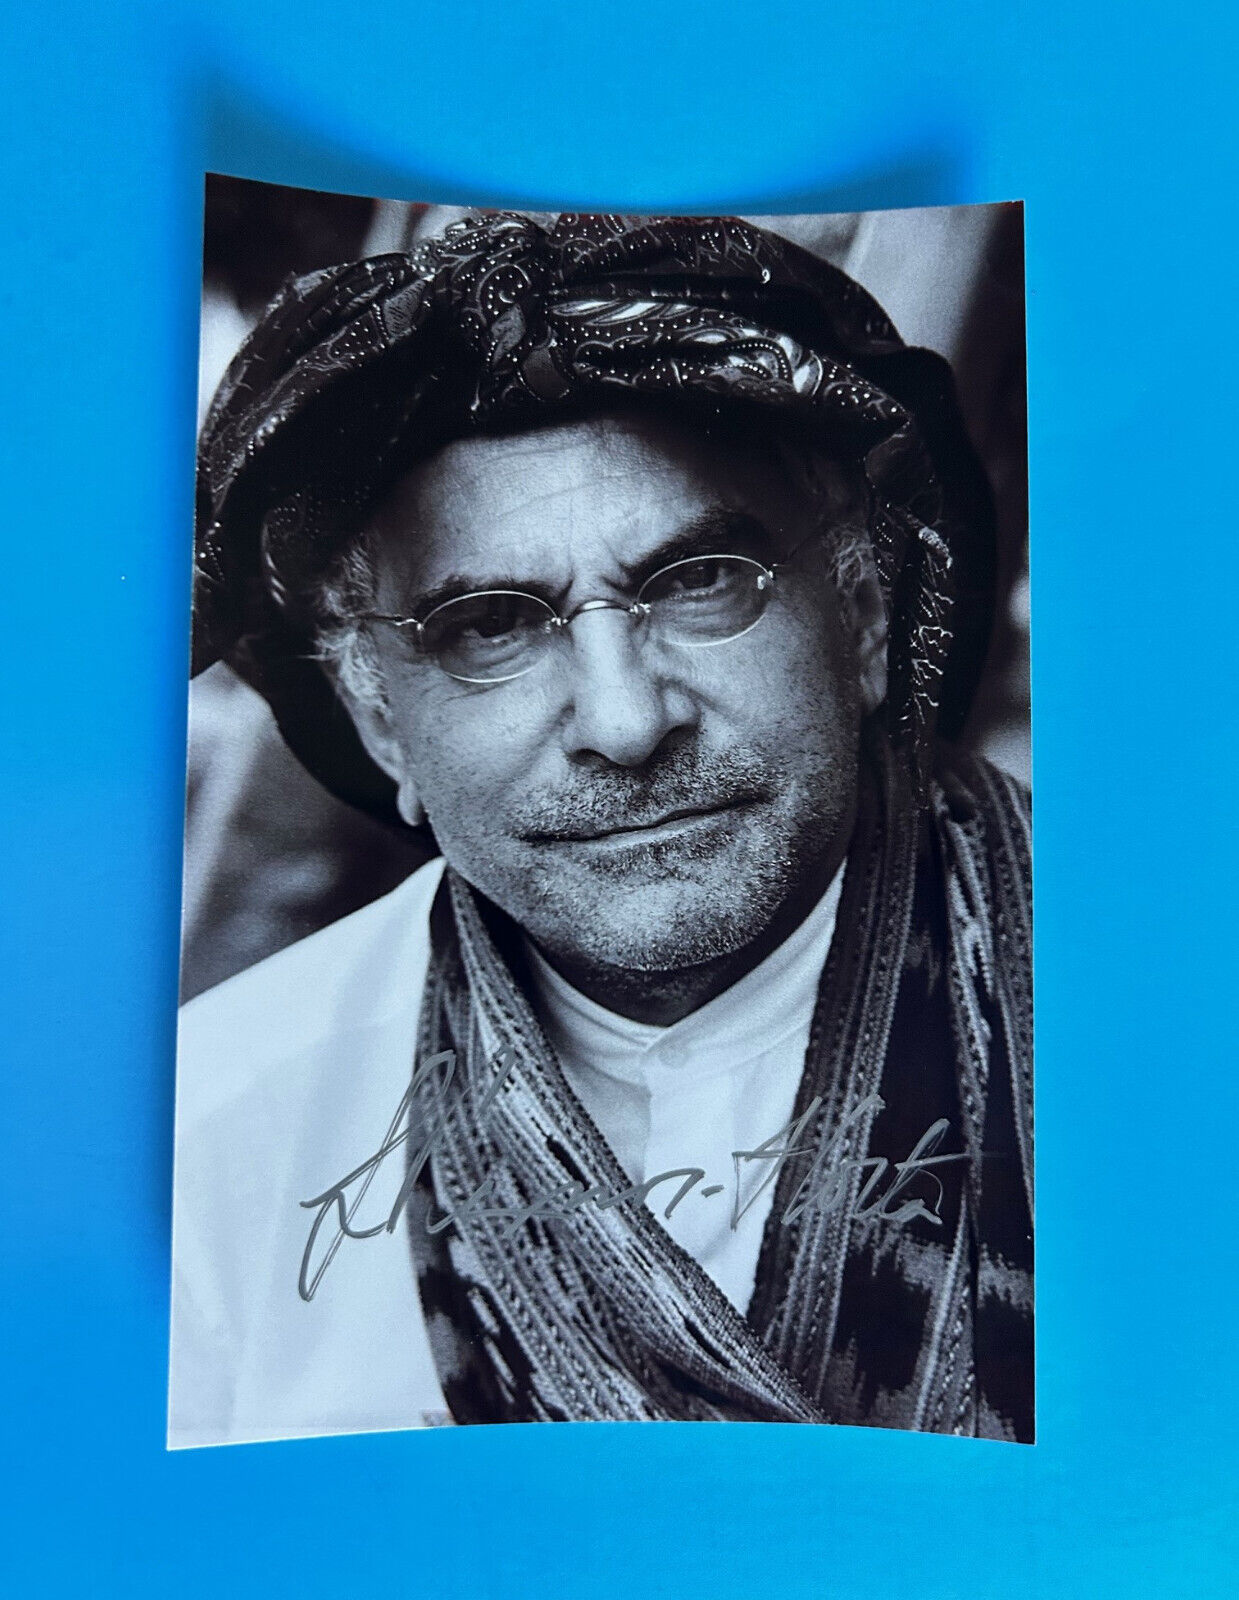 Jose Ramos-Horta (Nobel Peace Prize 1996) Hand Autographed Signed Photograph